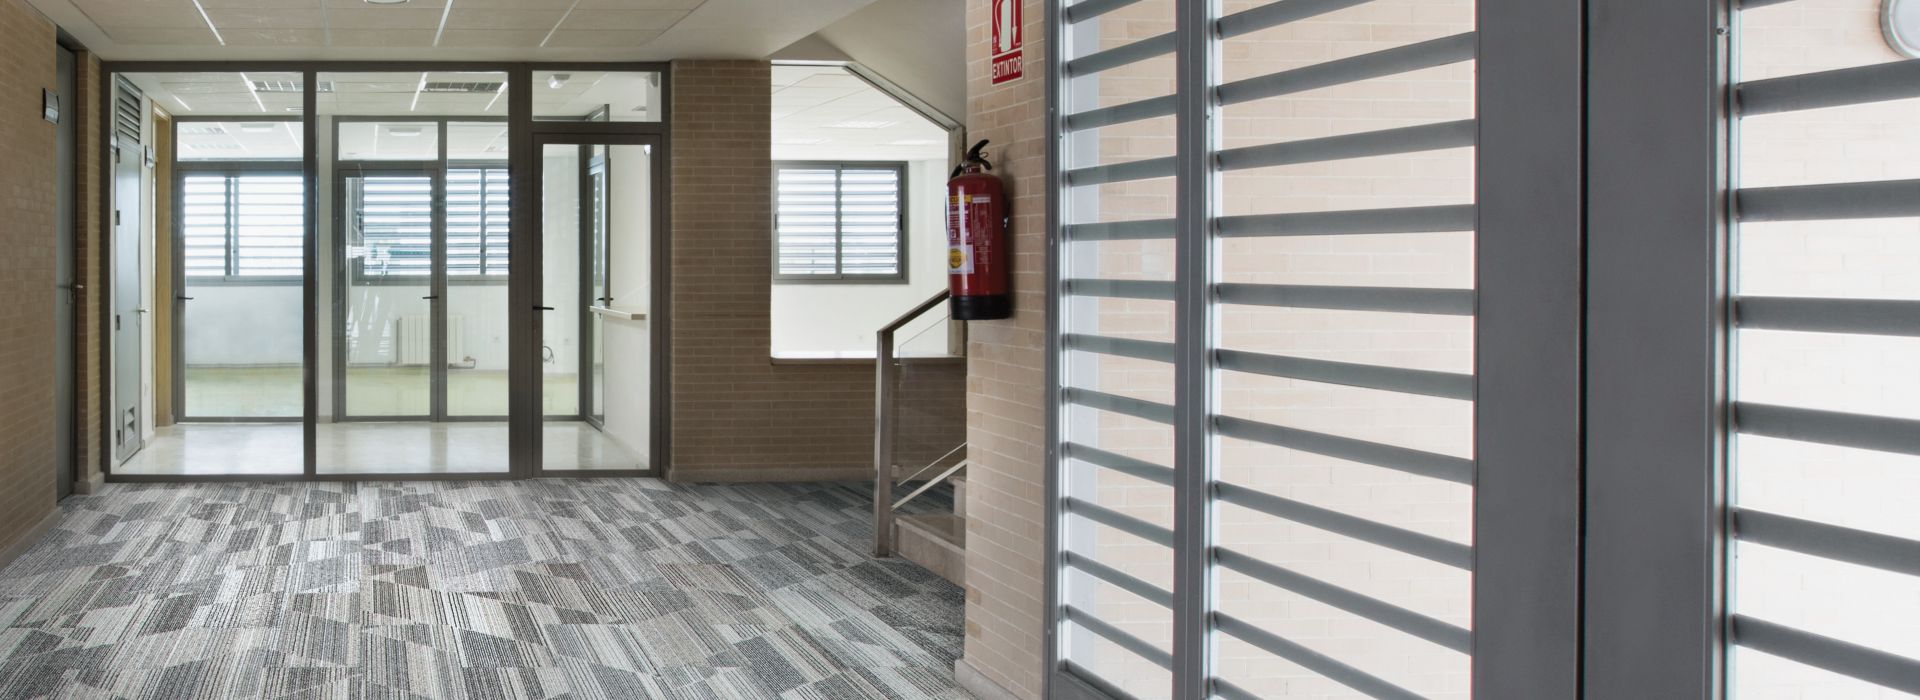 Interface Driftwood plank carpet tile in open area of corridor imagen número 1